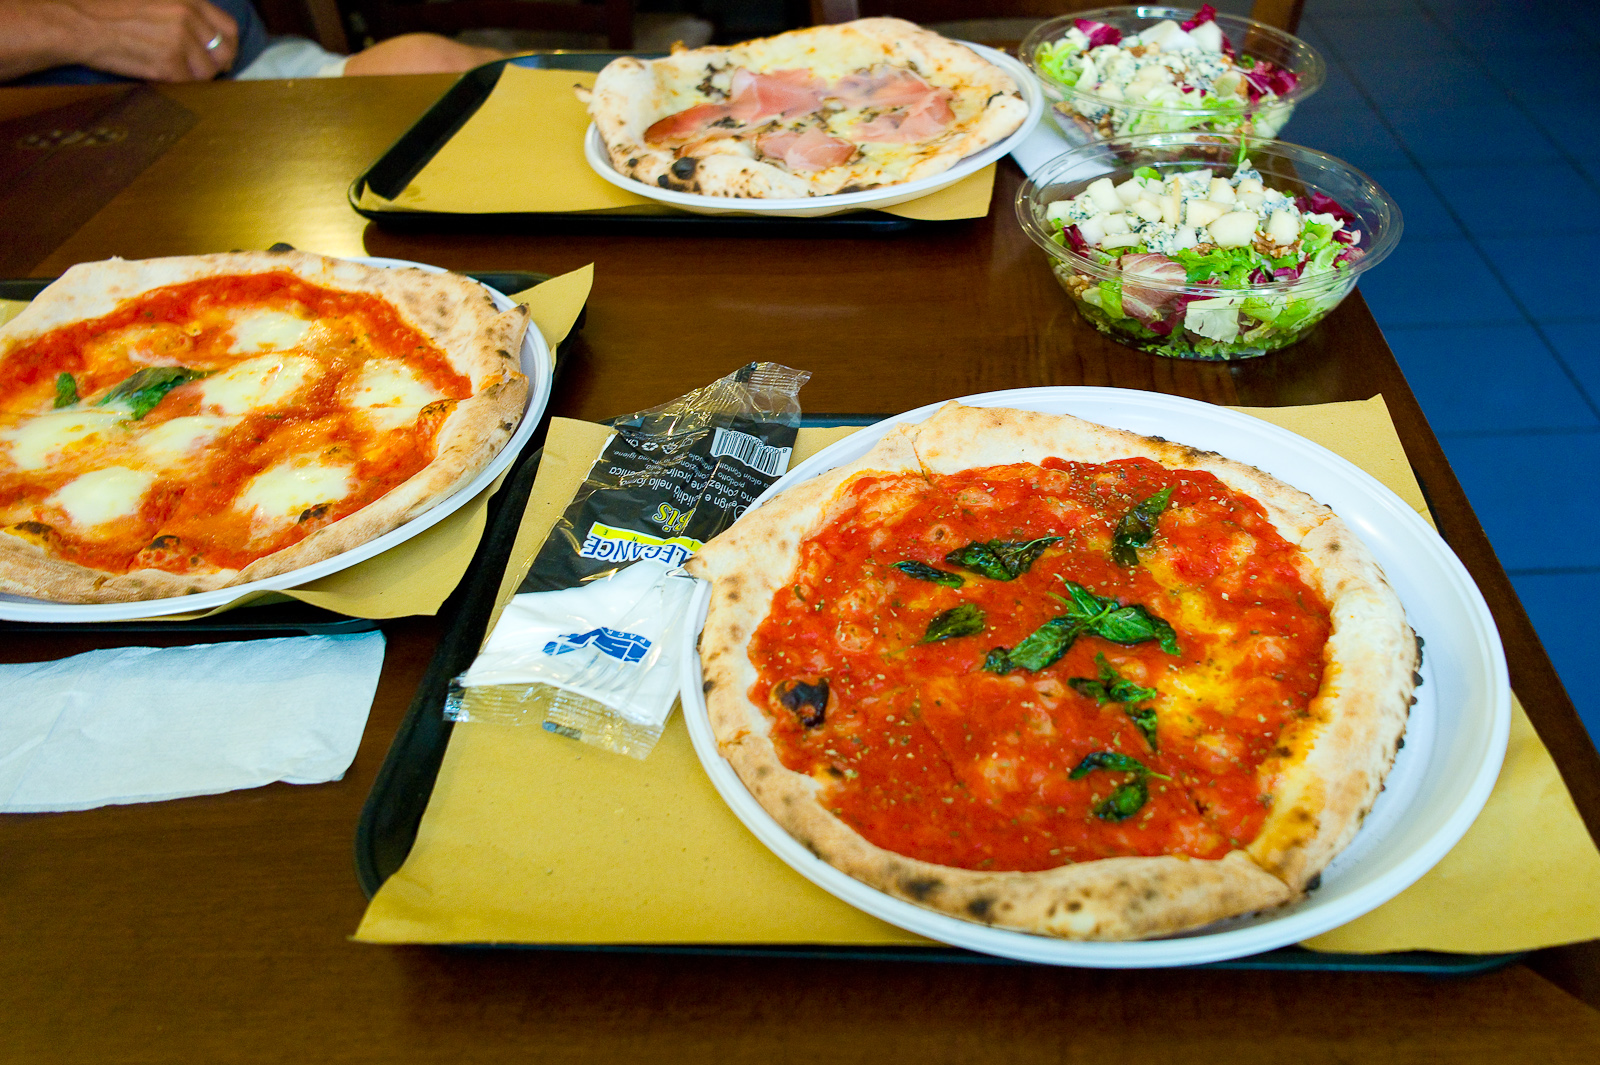 Pizza margherita, pizza marinara, pizza with speck and tomato, walnut salad